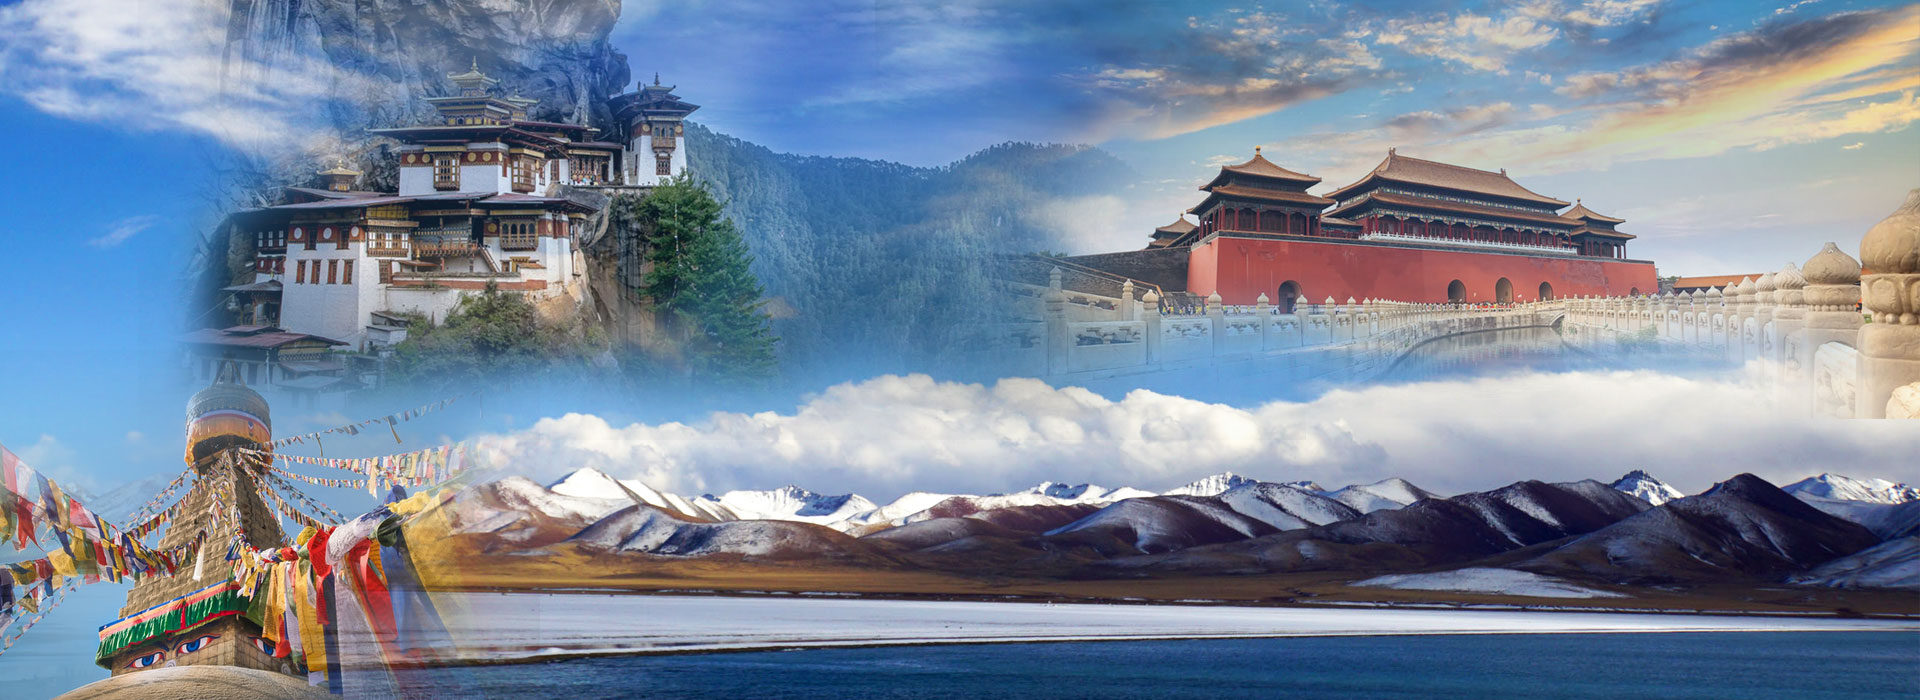 China Tibet Nepal Bhutan Tour